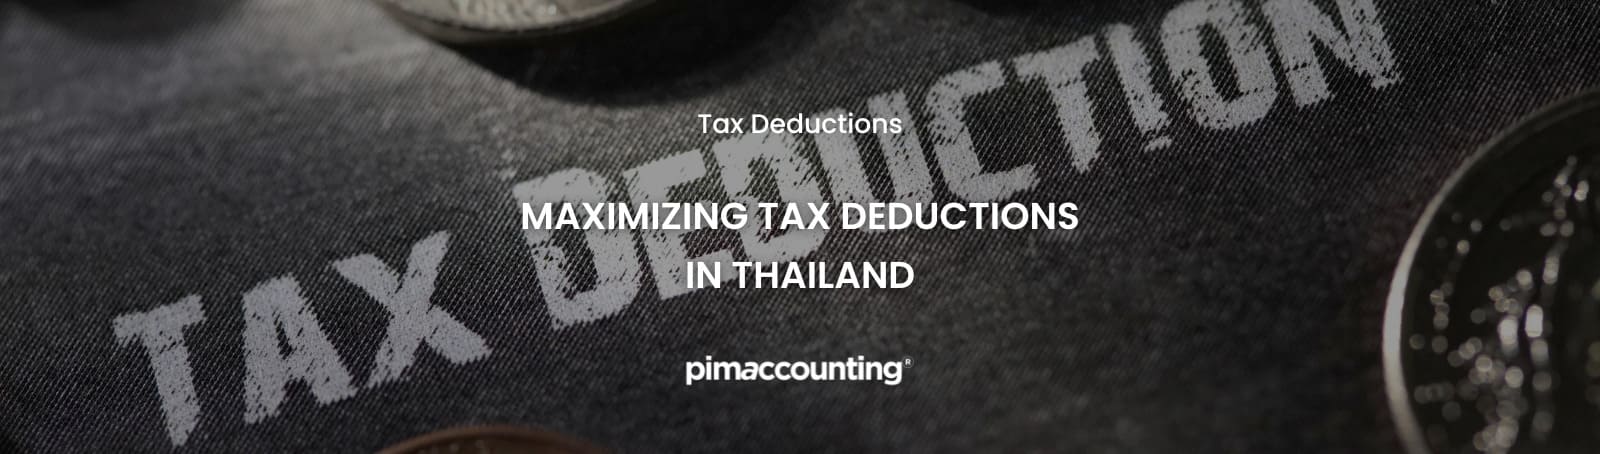 Maximizing Tax Deductions in Thailand - Pimaccounting